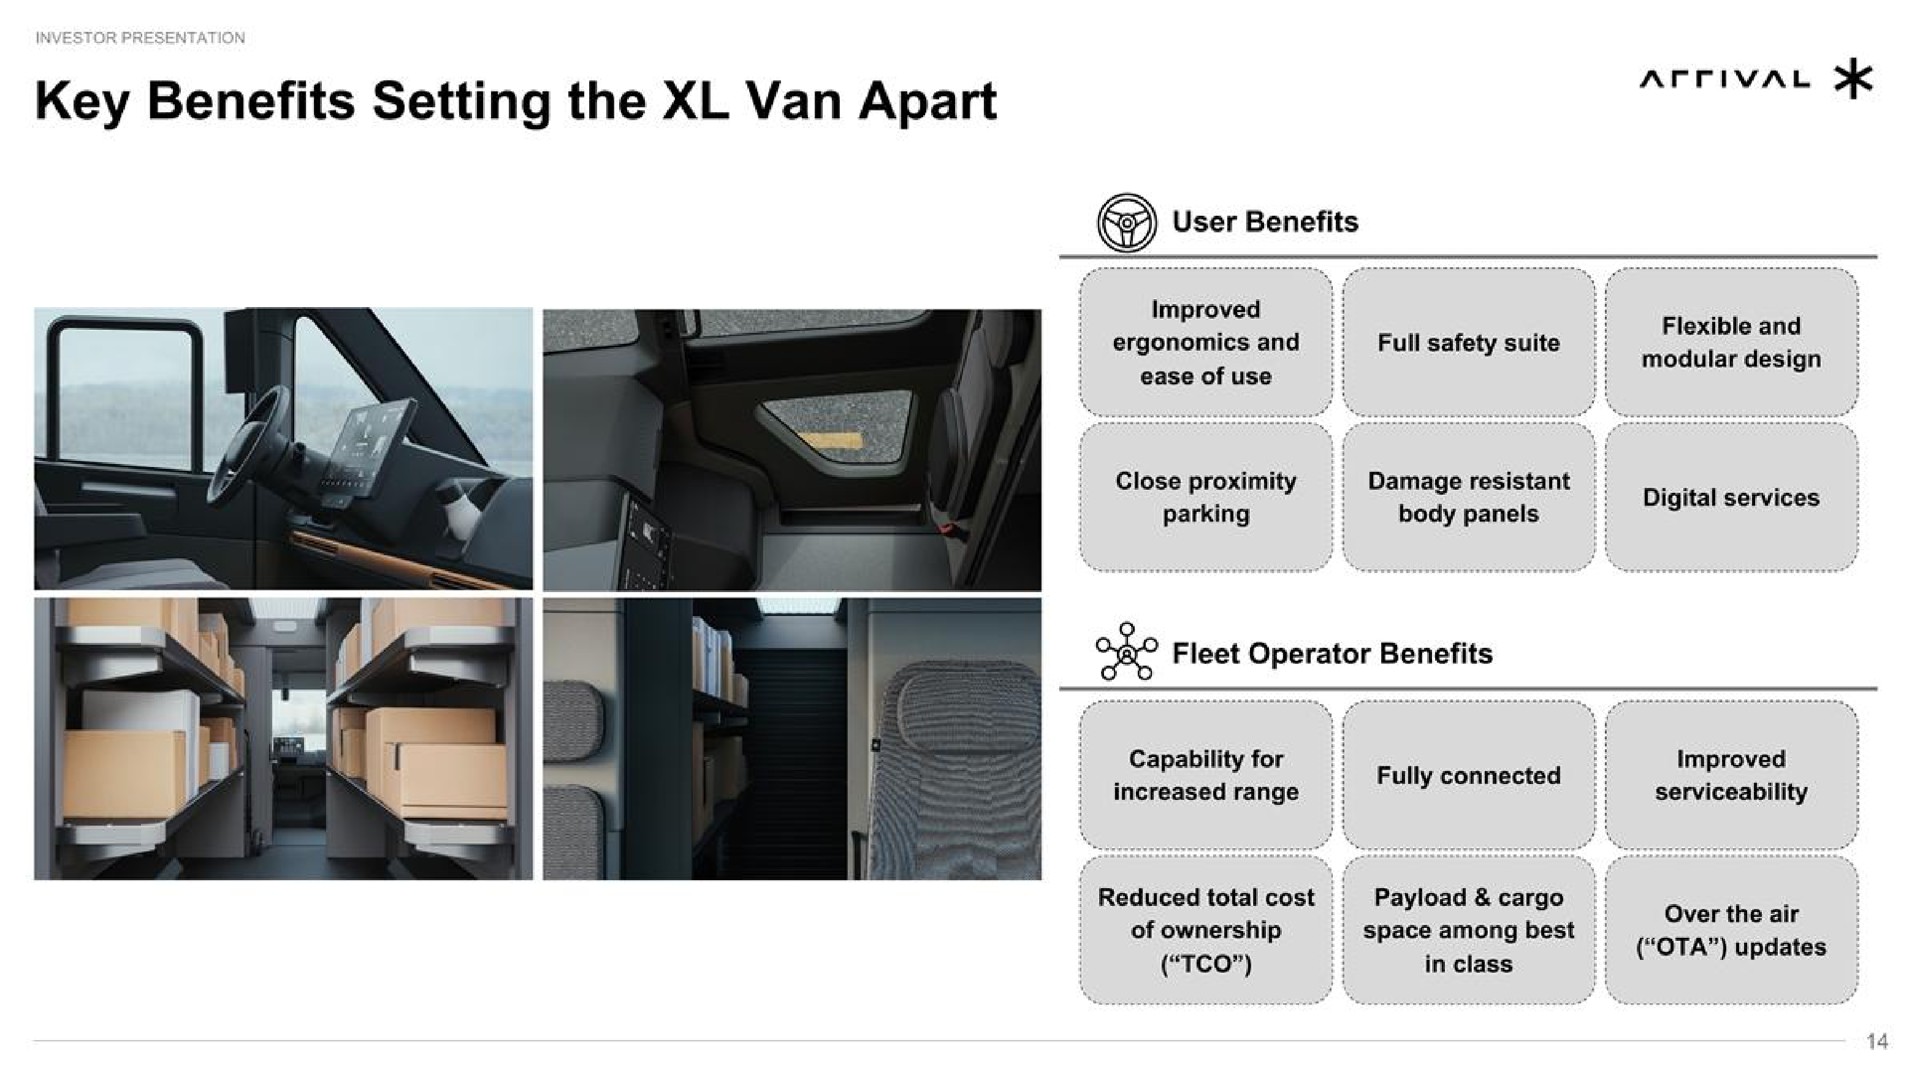 key benefits setting the van apart | Arrival